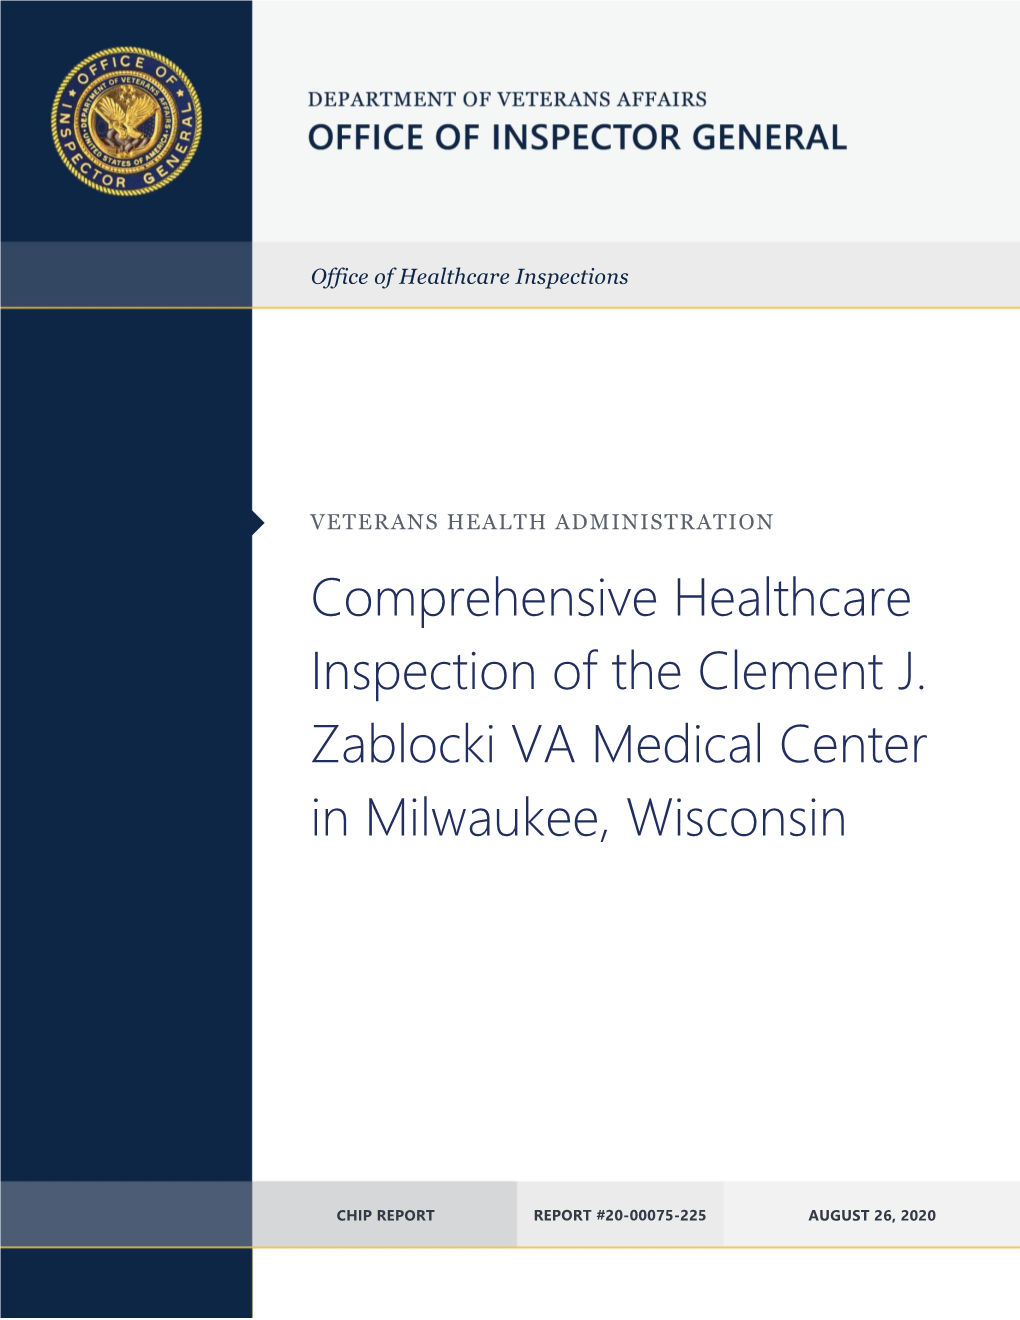 Clement J. Zablocki VA Medical Center in Milwaukee, Wisconsin